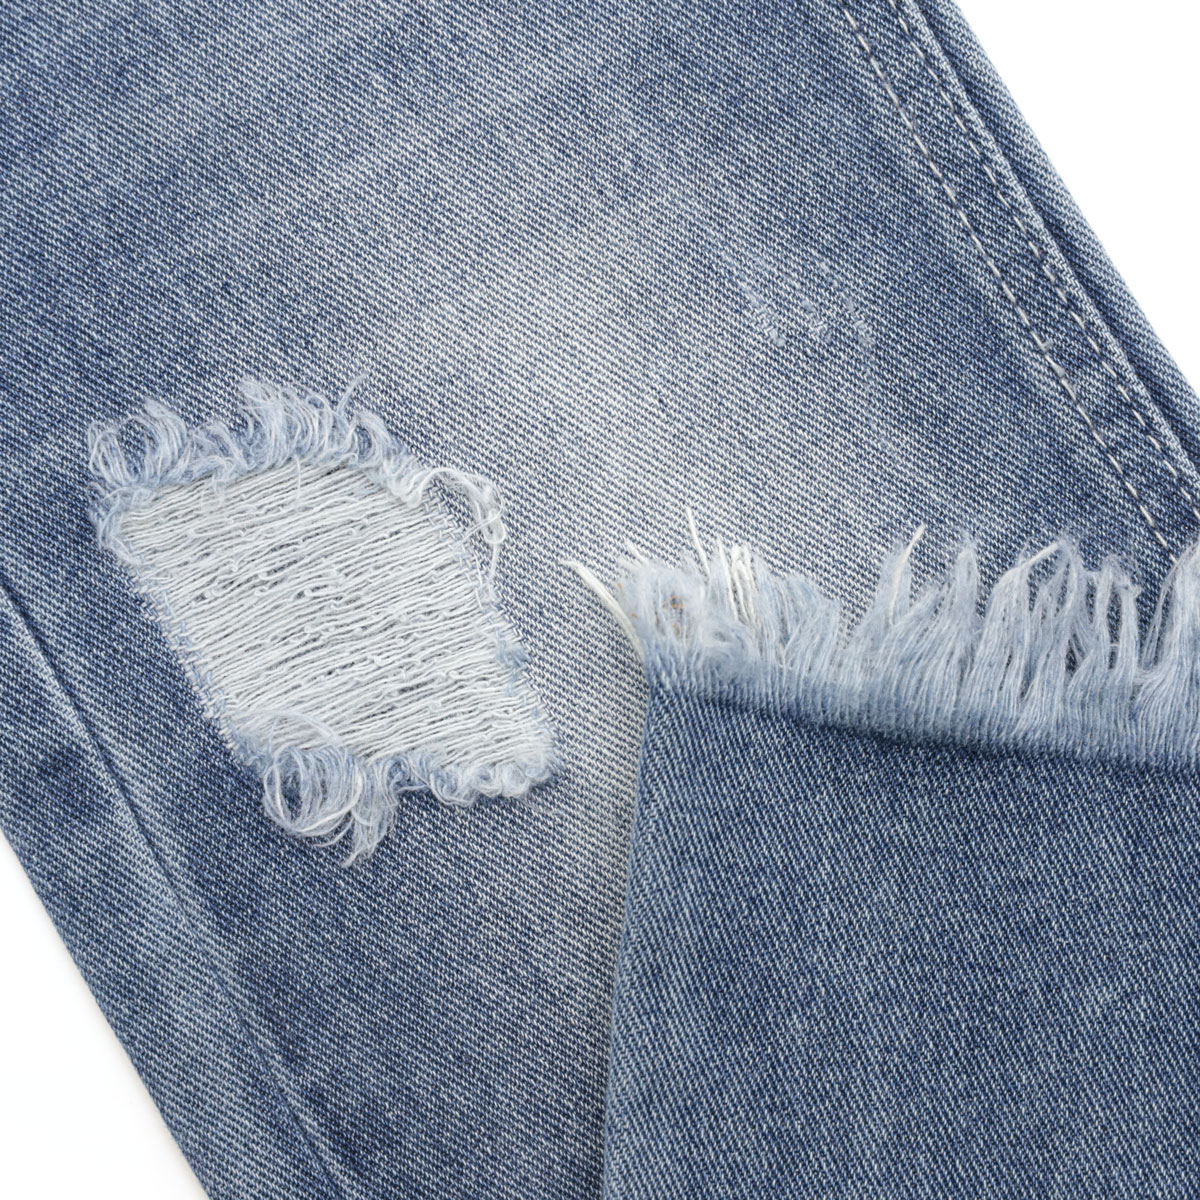 How to Care for High Stretch Denim Fabric 1